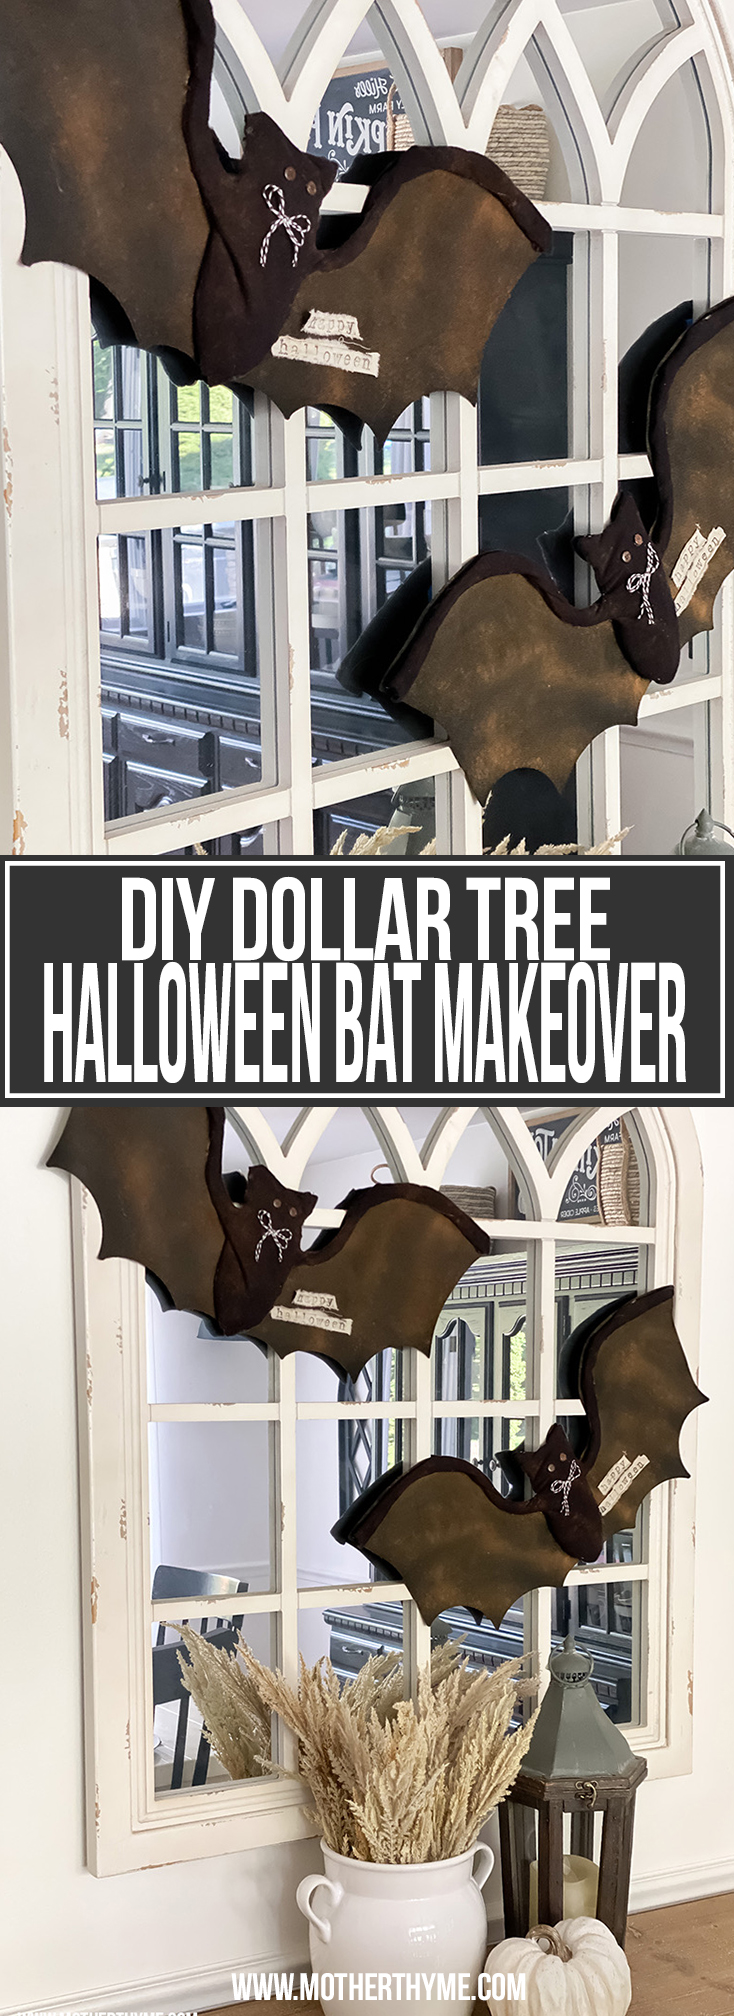 DIY DOLLAR TREE HALLOWEEN BAT MAKEOVER